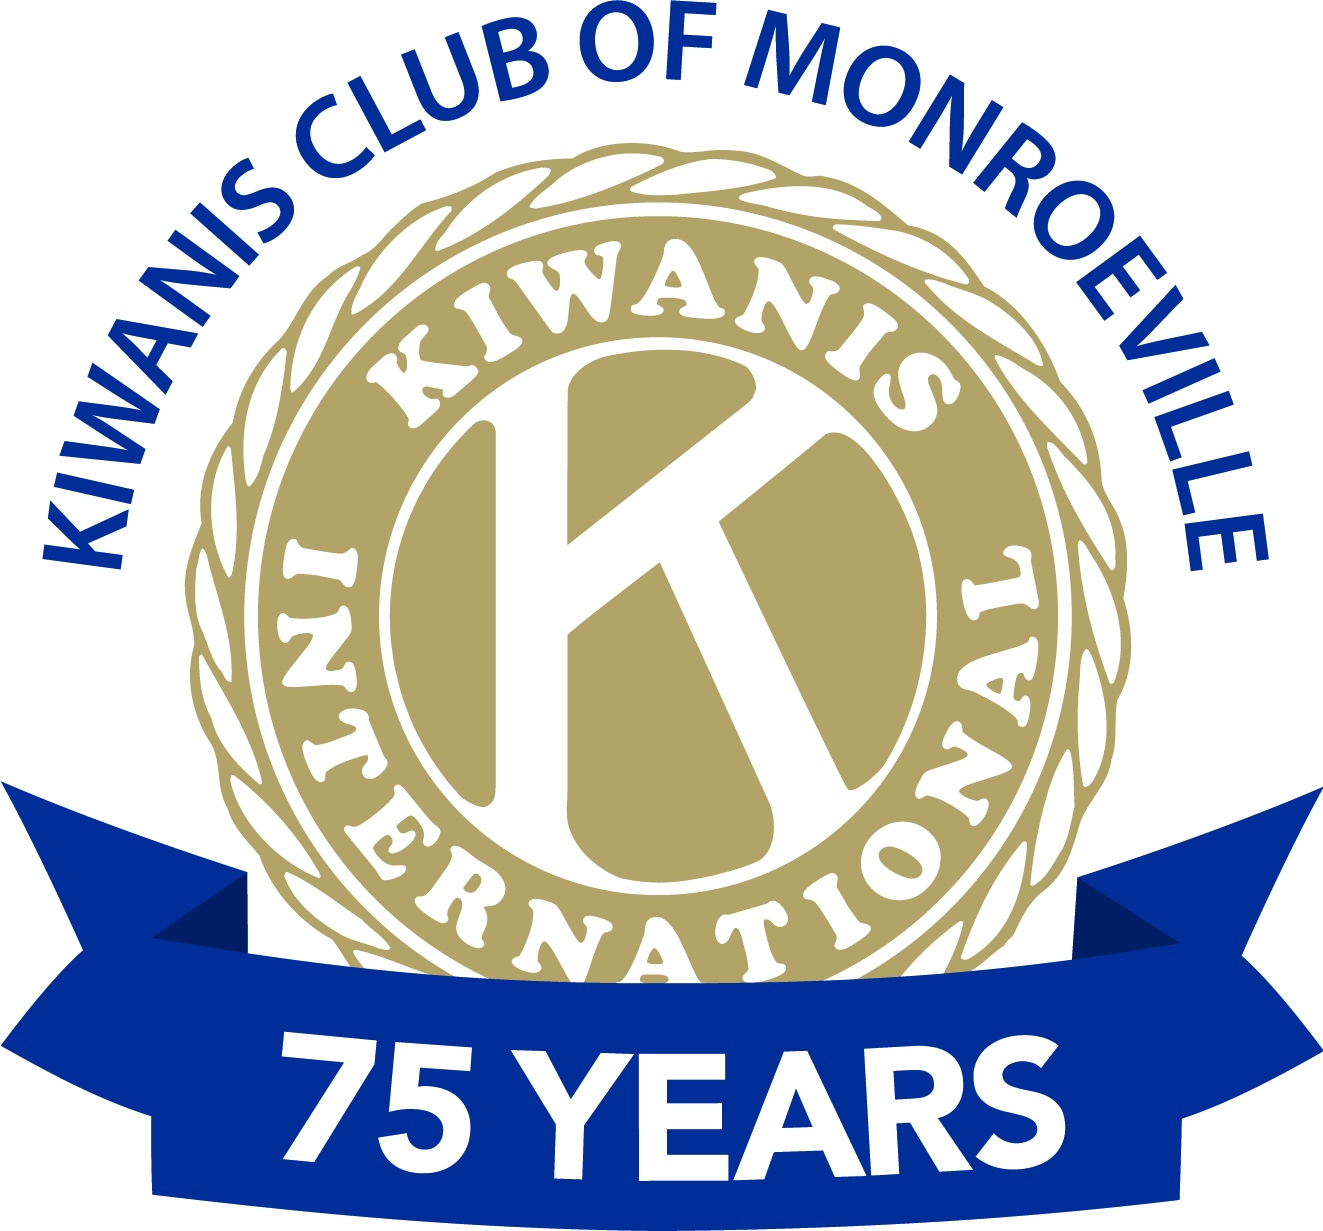 Kiwanis Club of Monroeville 75th Anniversary Logo